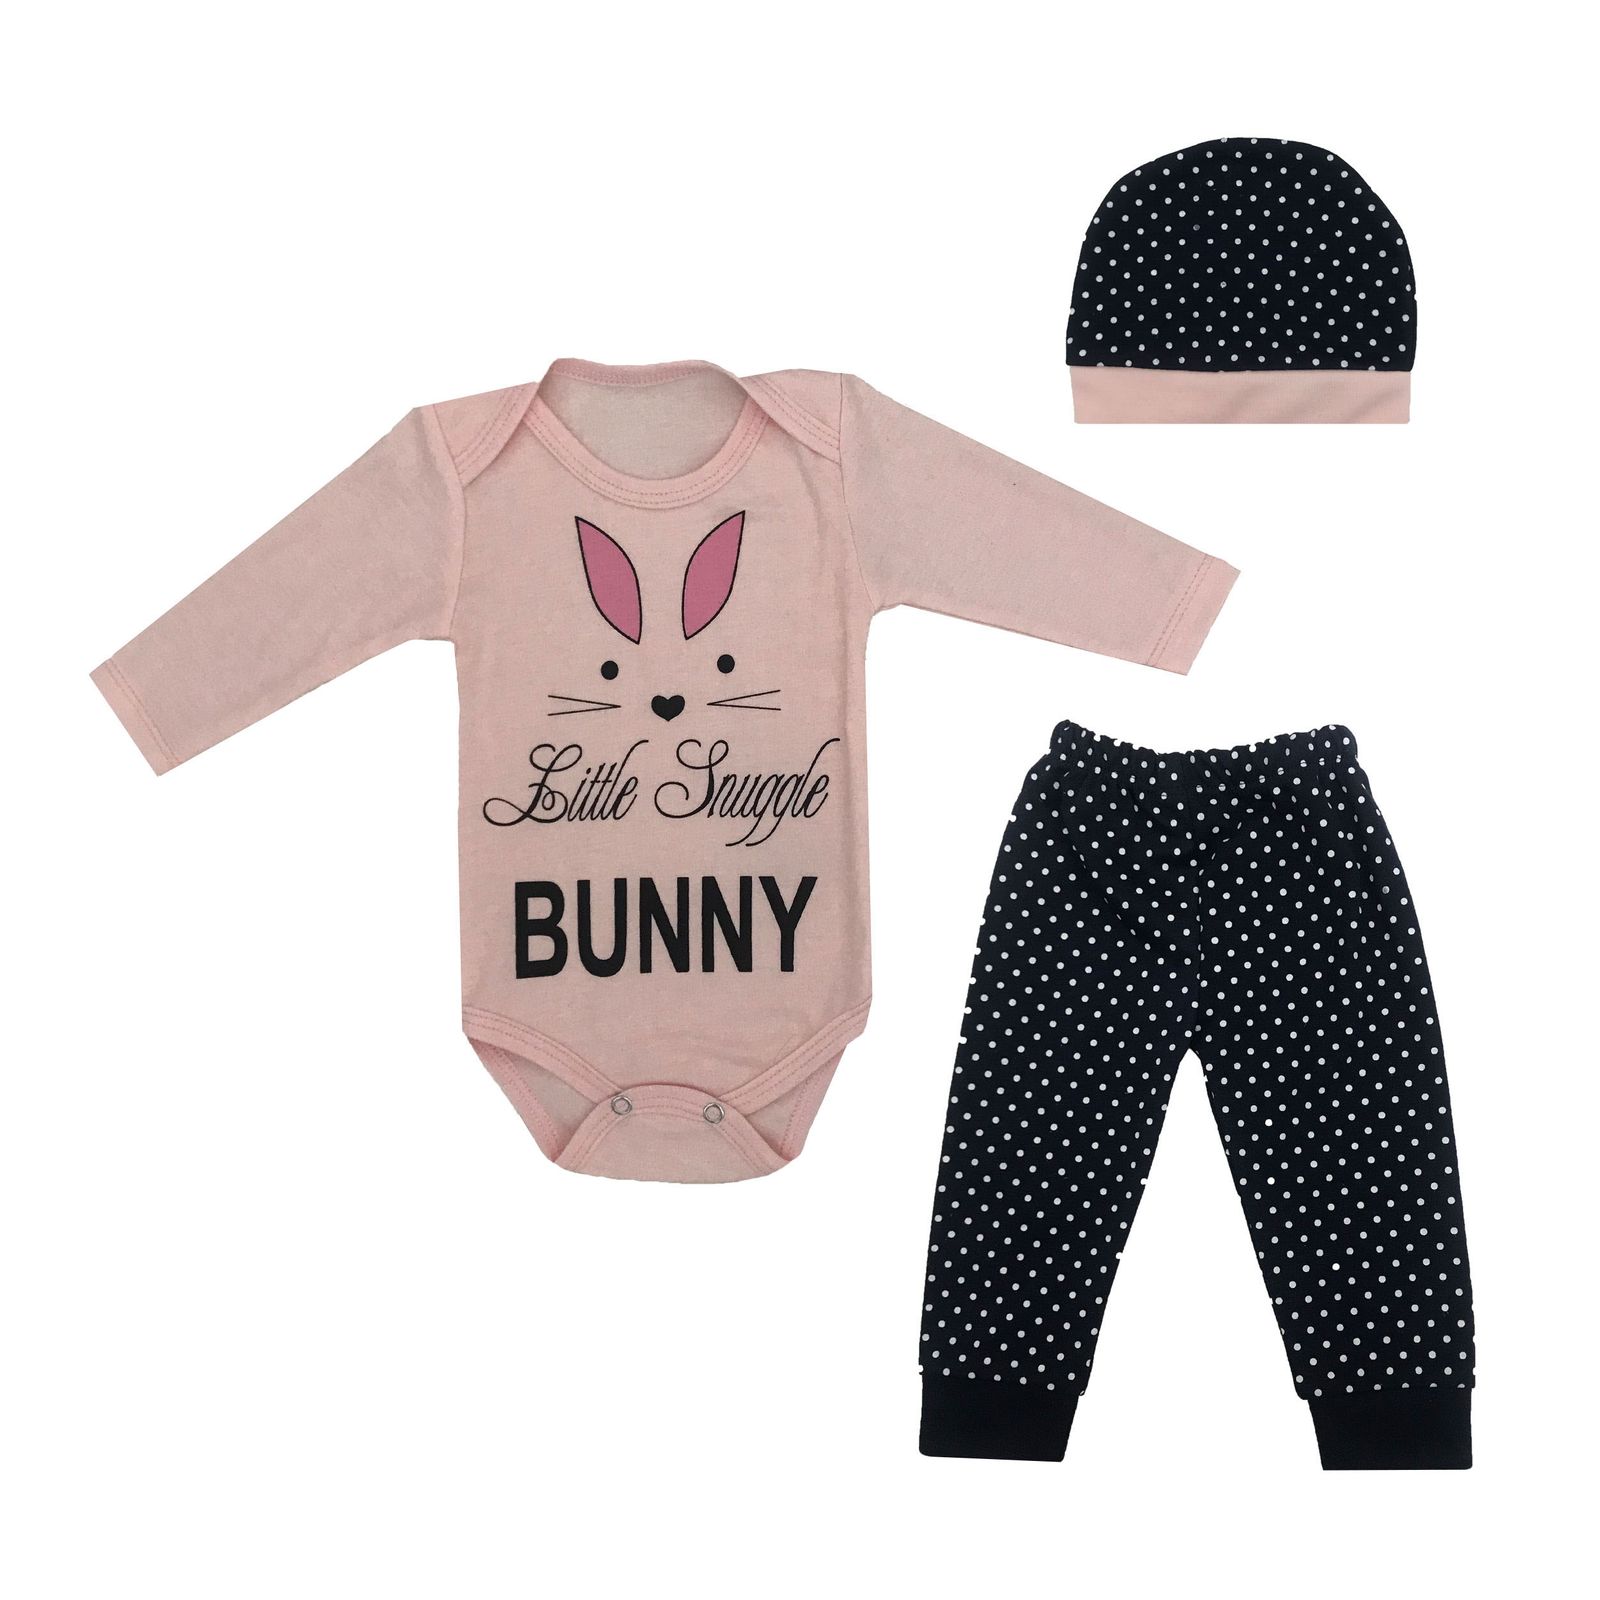 ست 3 تکه لباس نوزادی طرح خرگوش کد 101 -  - 2